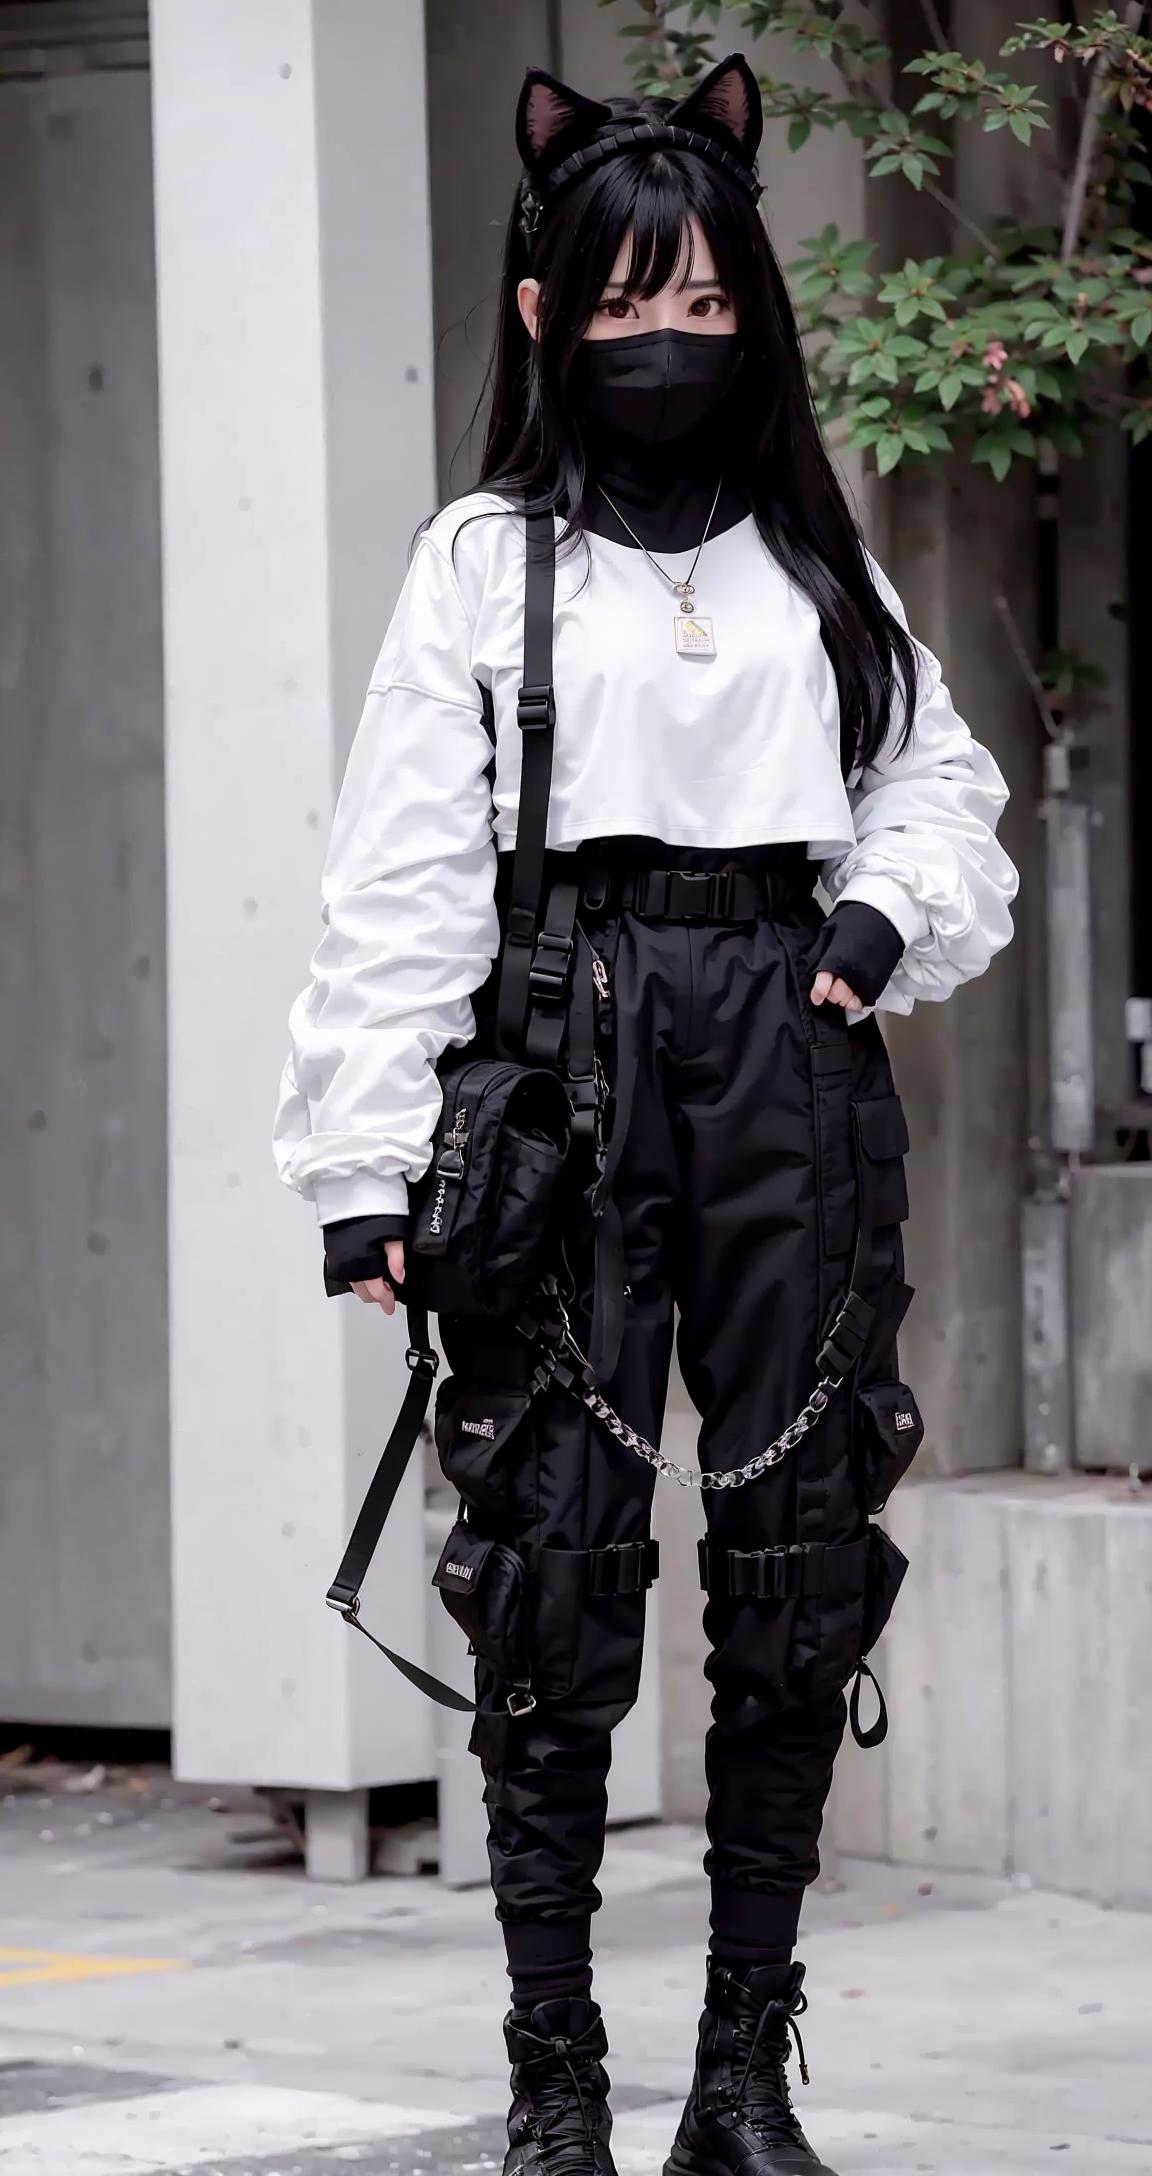 Urban Samurai | v0.14 | Clothing LoRA image by XianYun